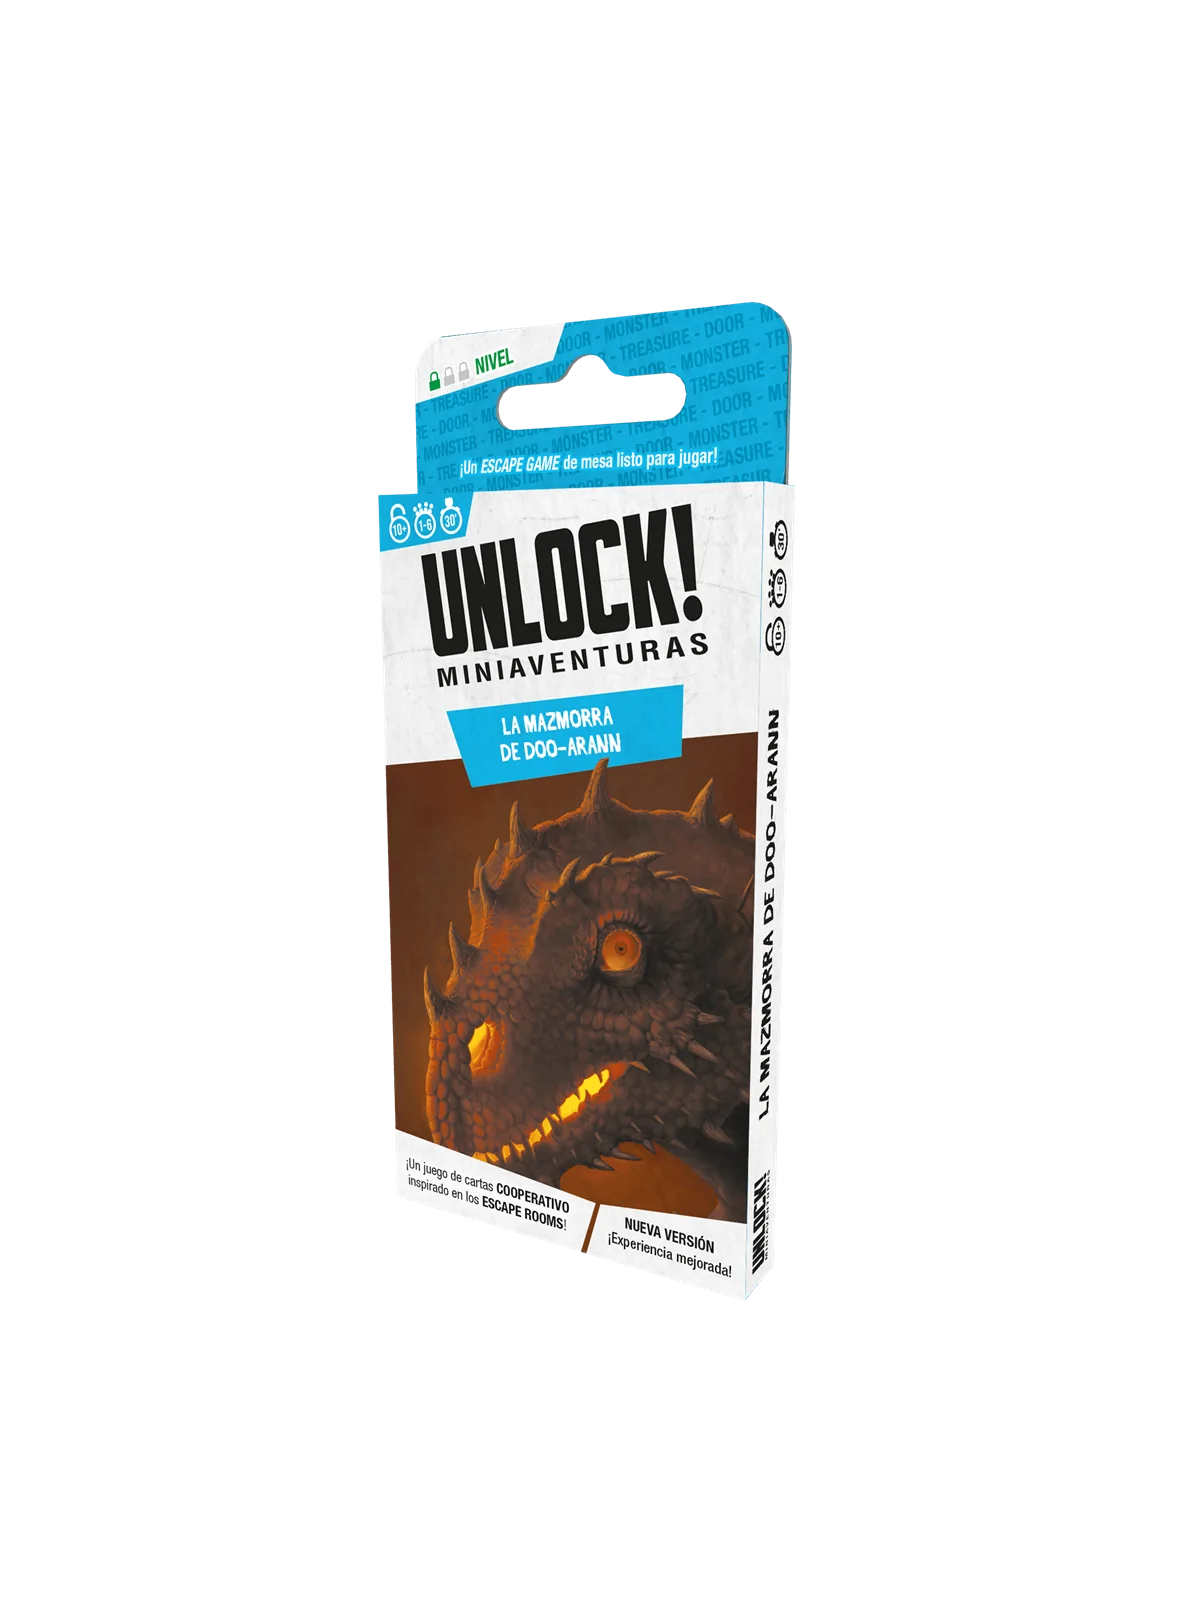 Comprar Unlock! Miniaventuras La Mazmorra de Doo-Arann barato al mejor